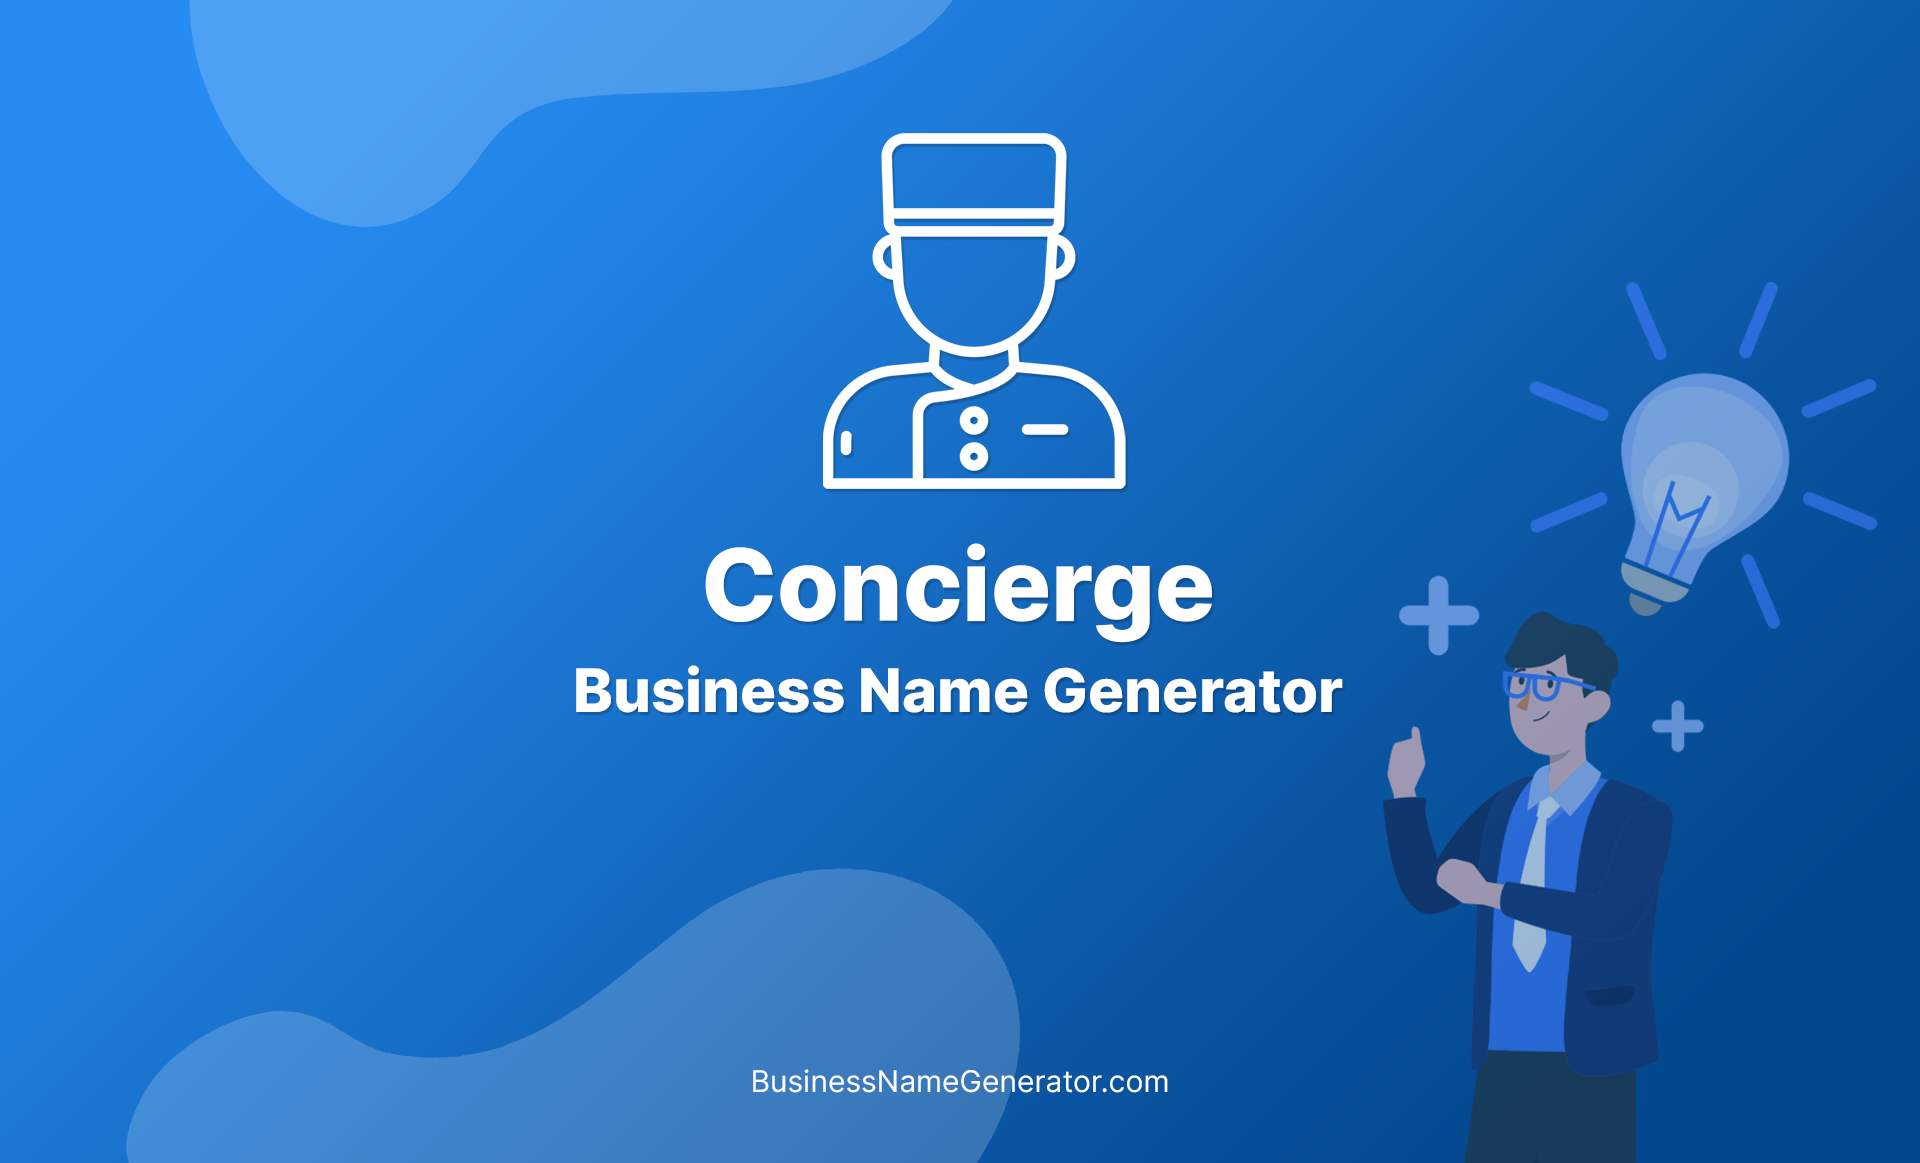 Concierge Business Name Generator